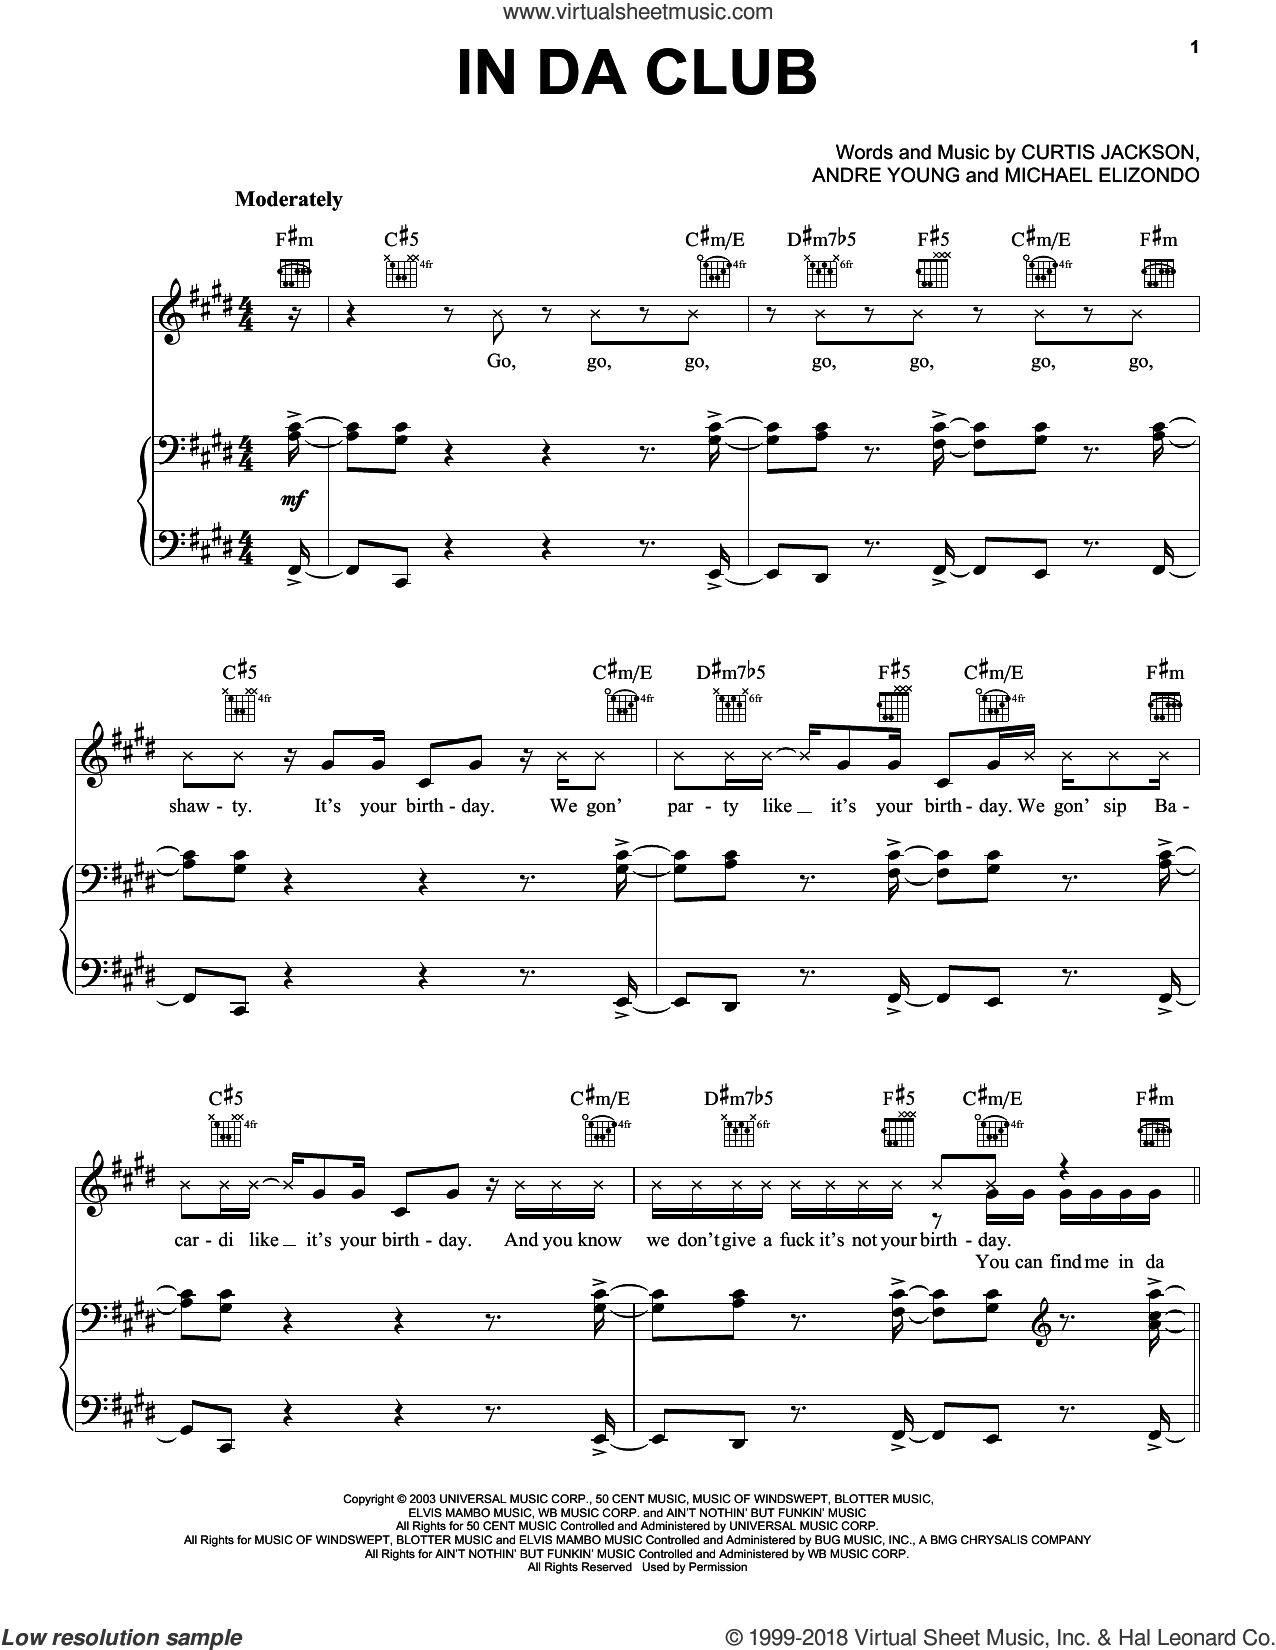 In Da Club sheet music for voice, piano or guitar (PDF)